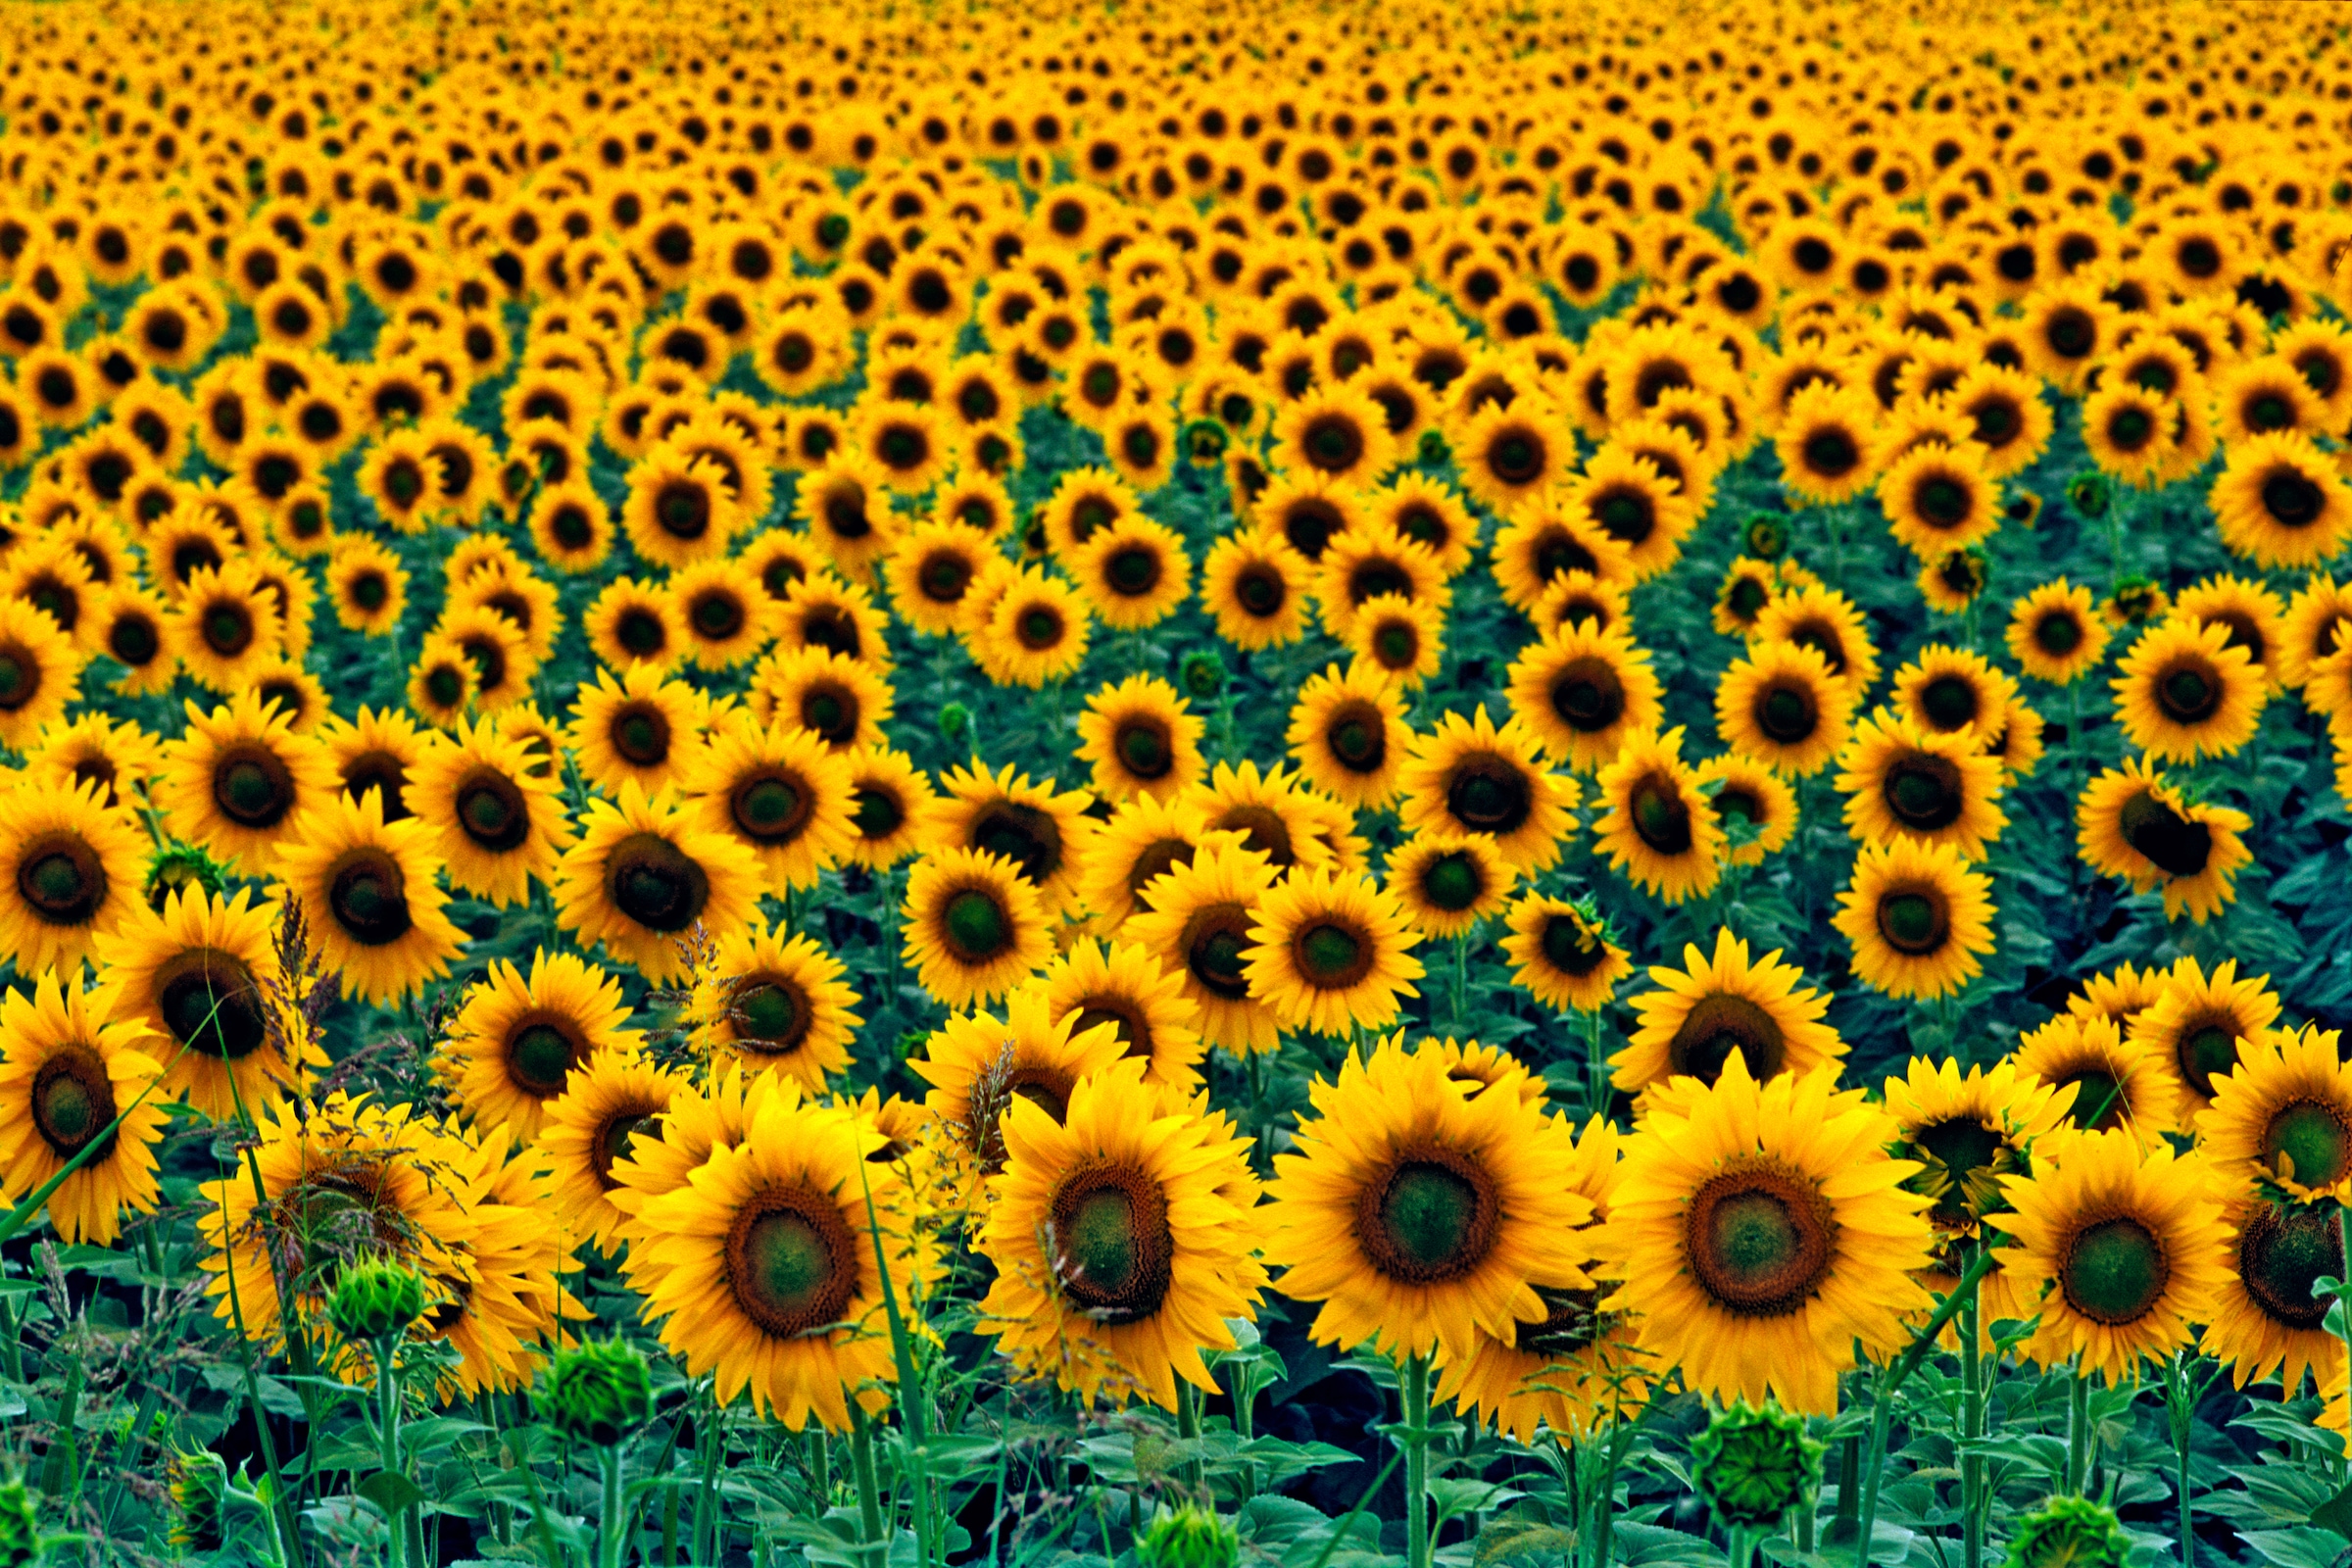 Papermoon Fototapete »Field of Sunflowers«